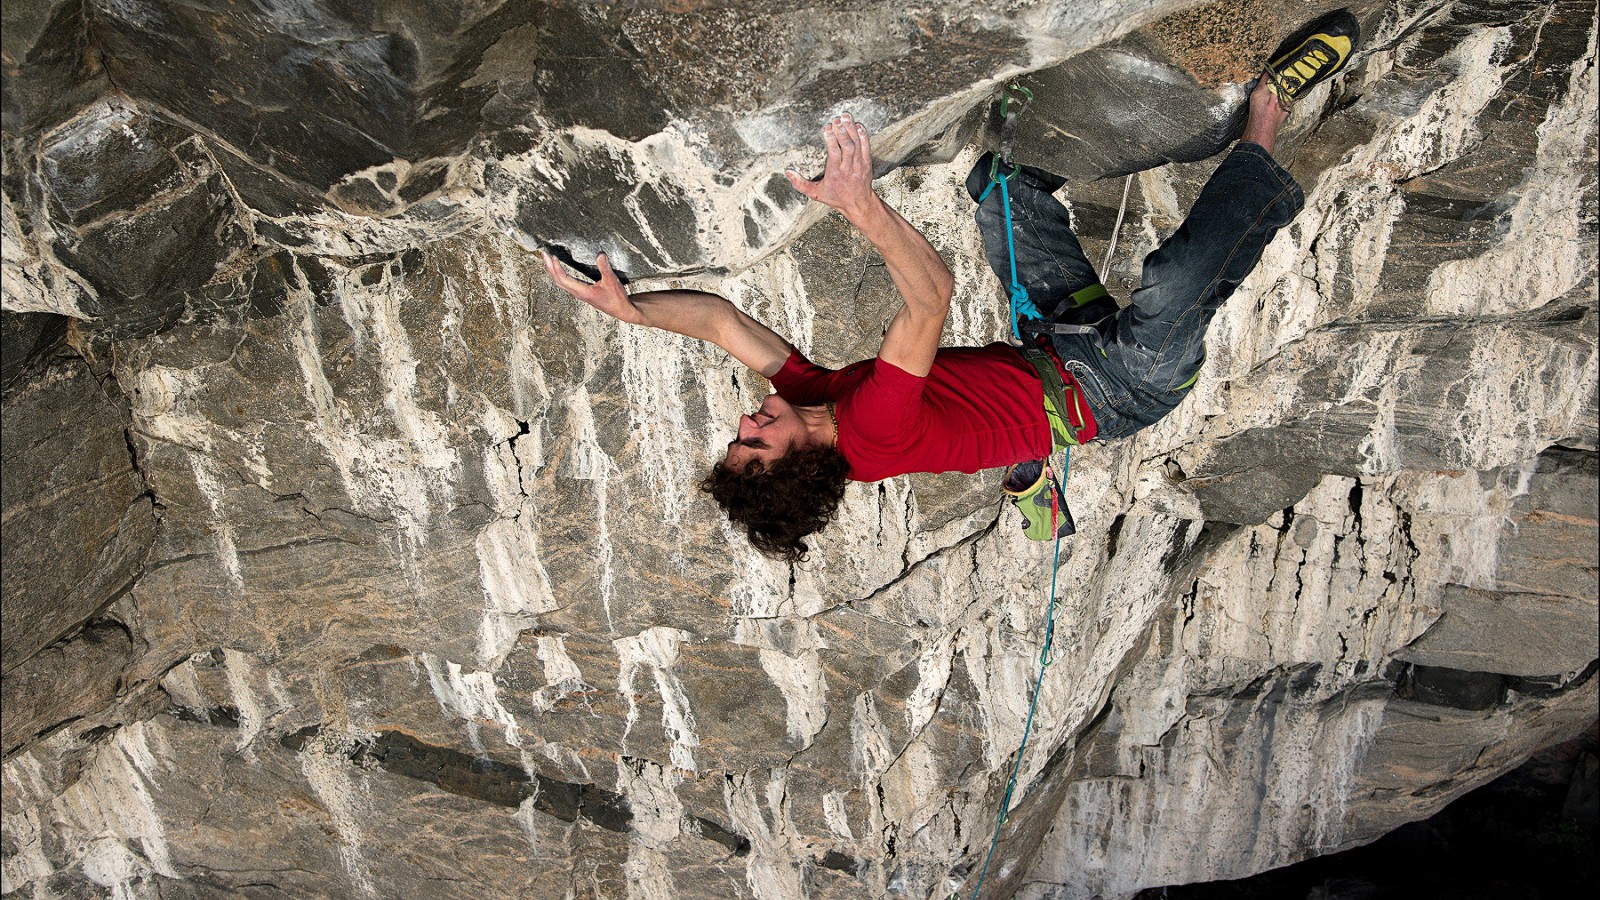 Adam Ondra: Climbing champion scales new heights